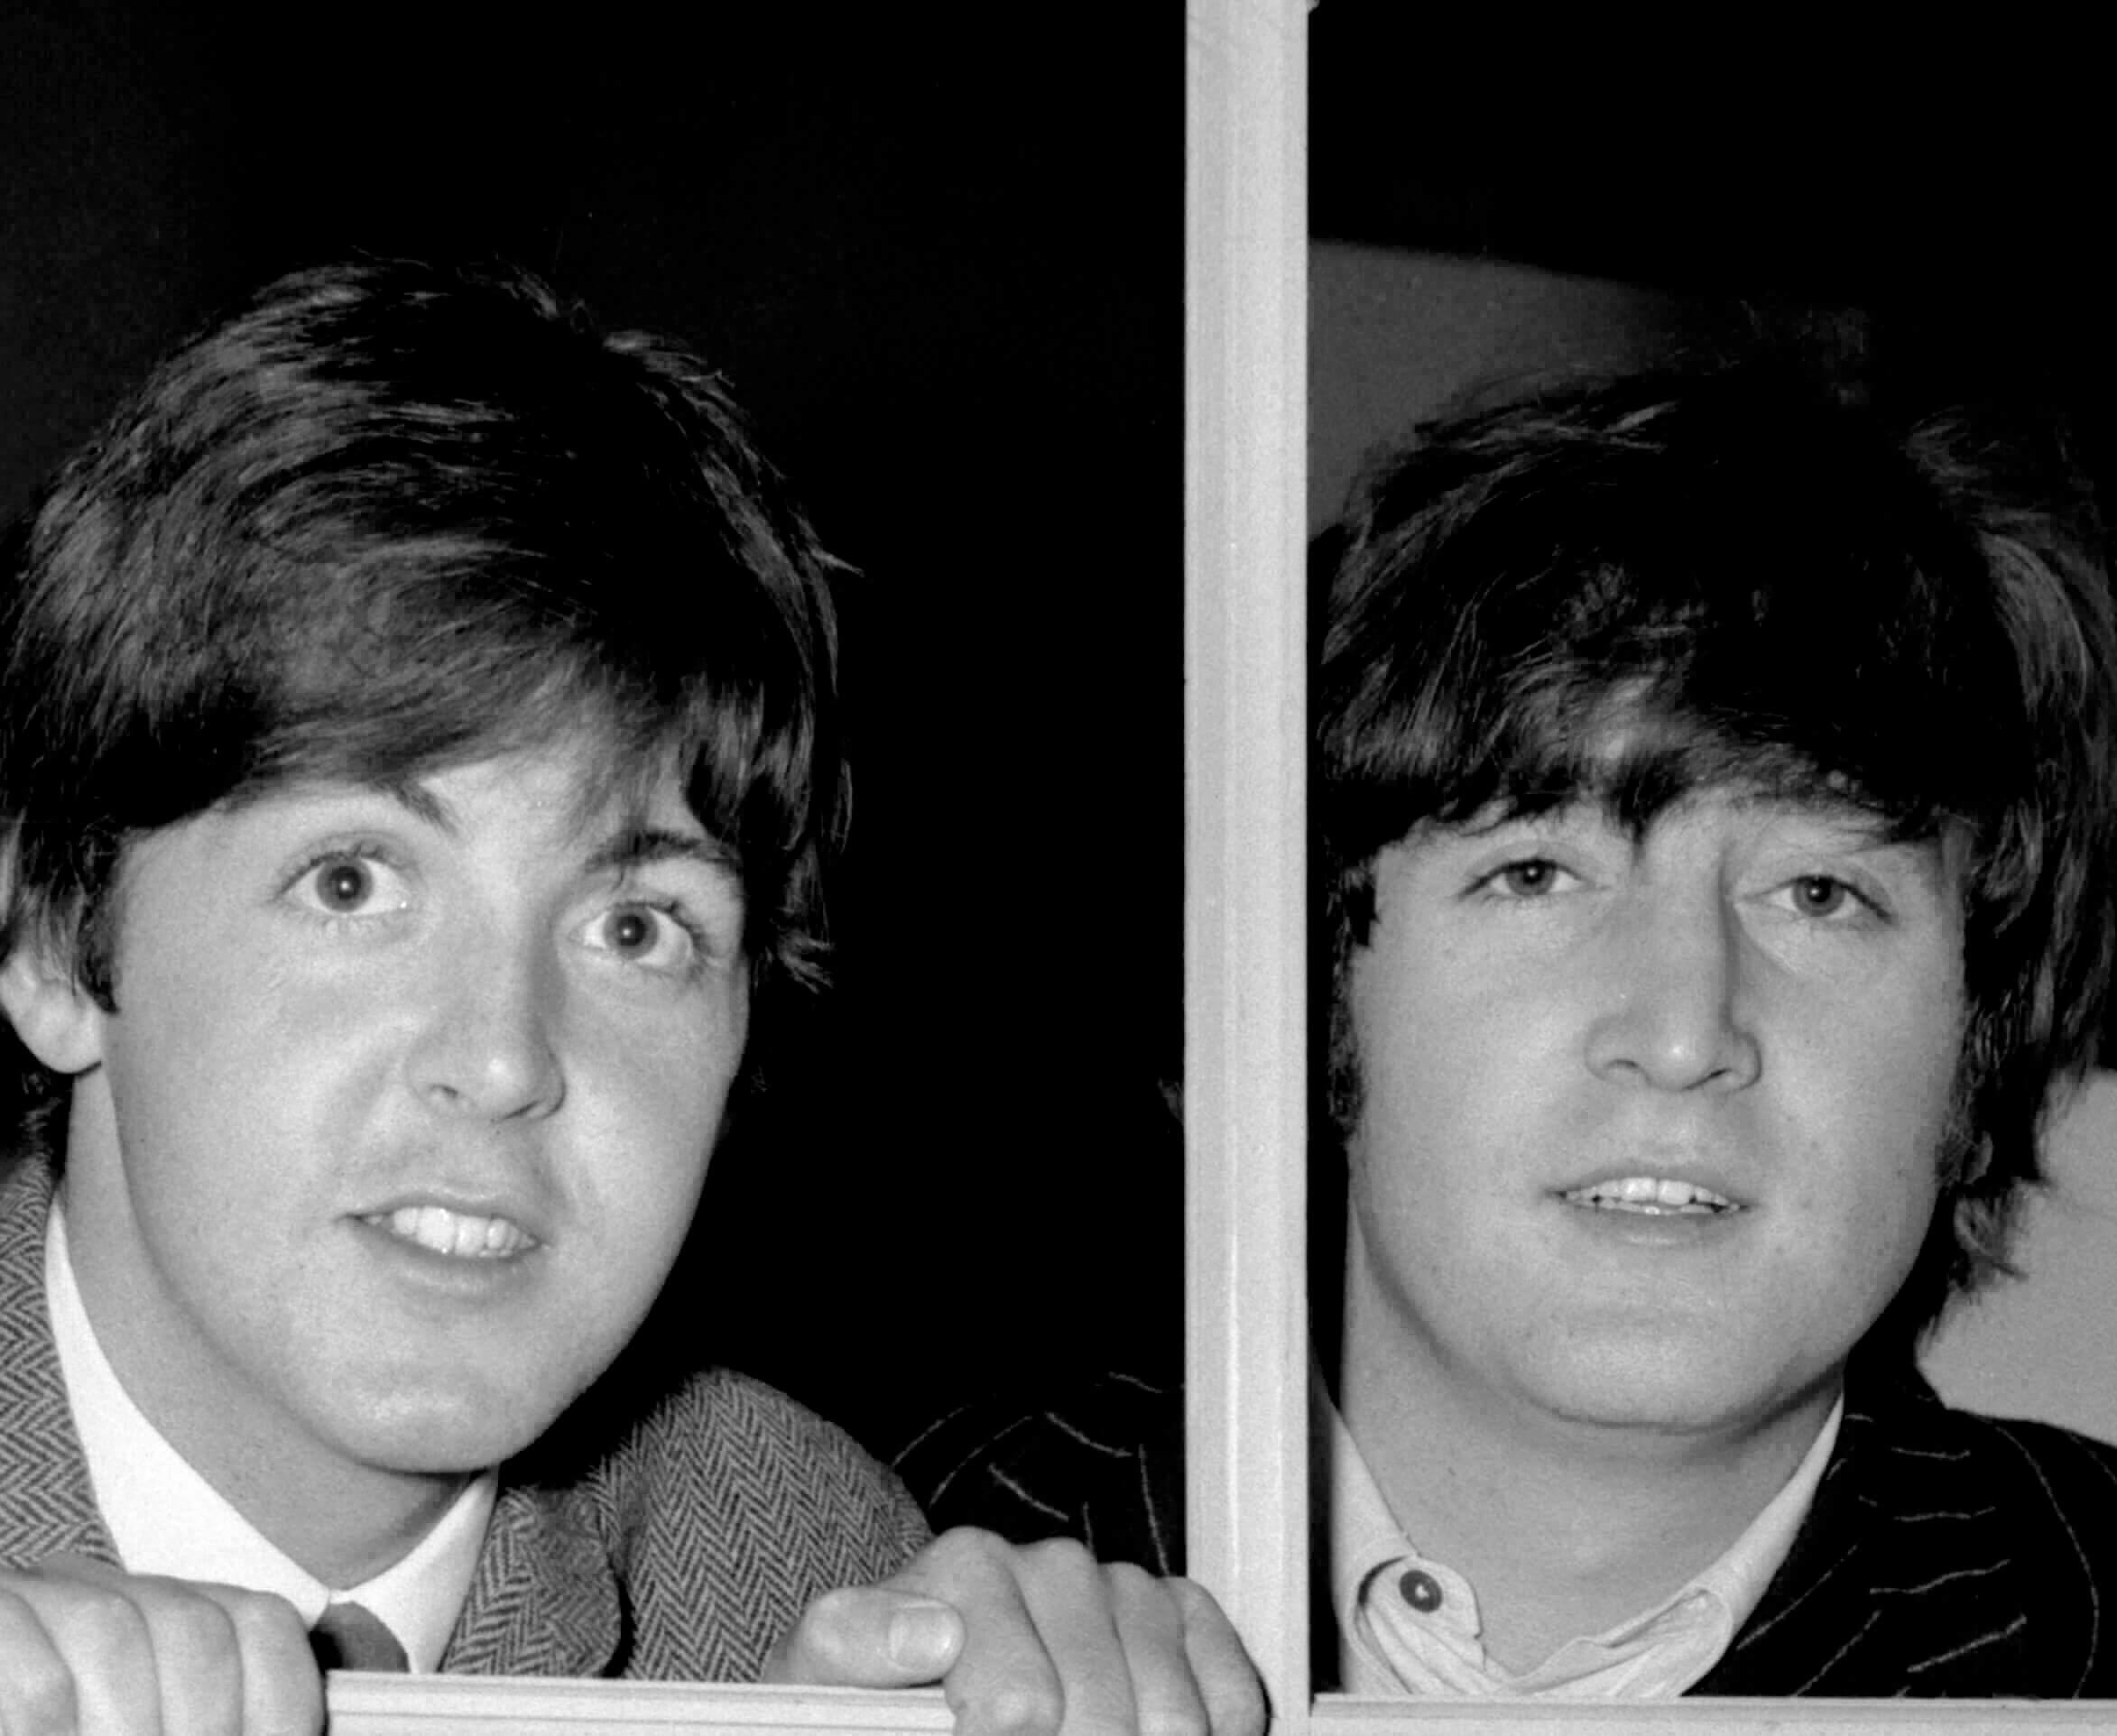 The Beatles' Paul McCartney and John Lennon looking through a window